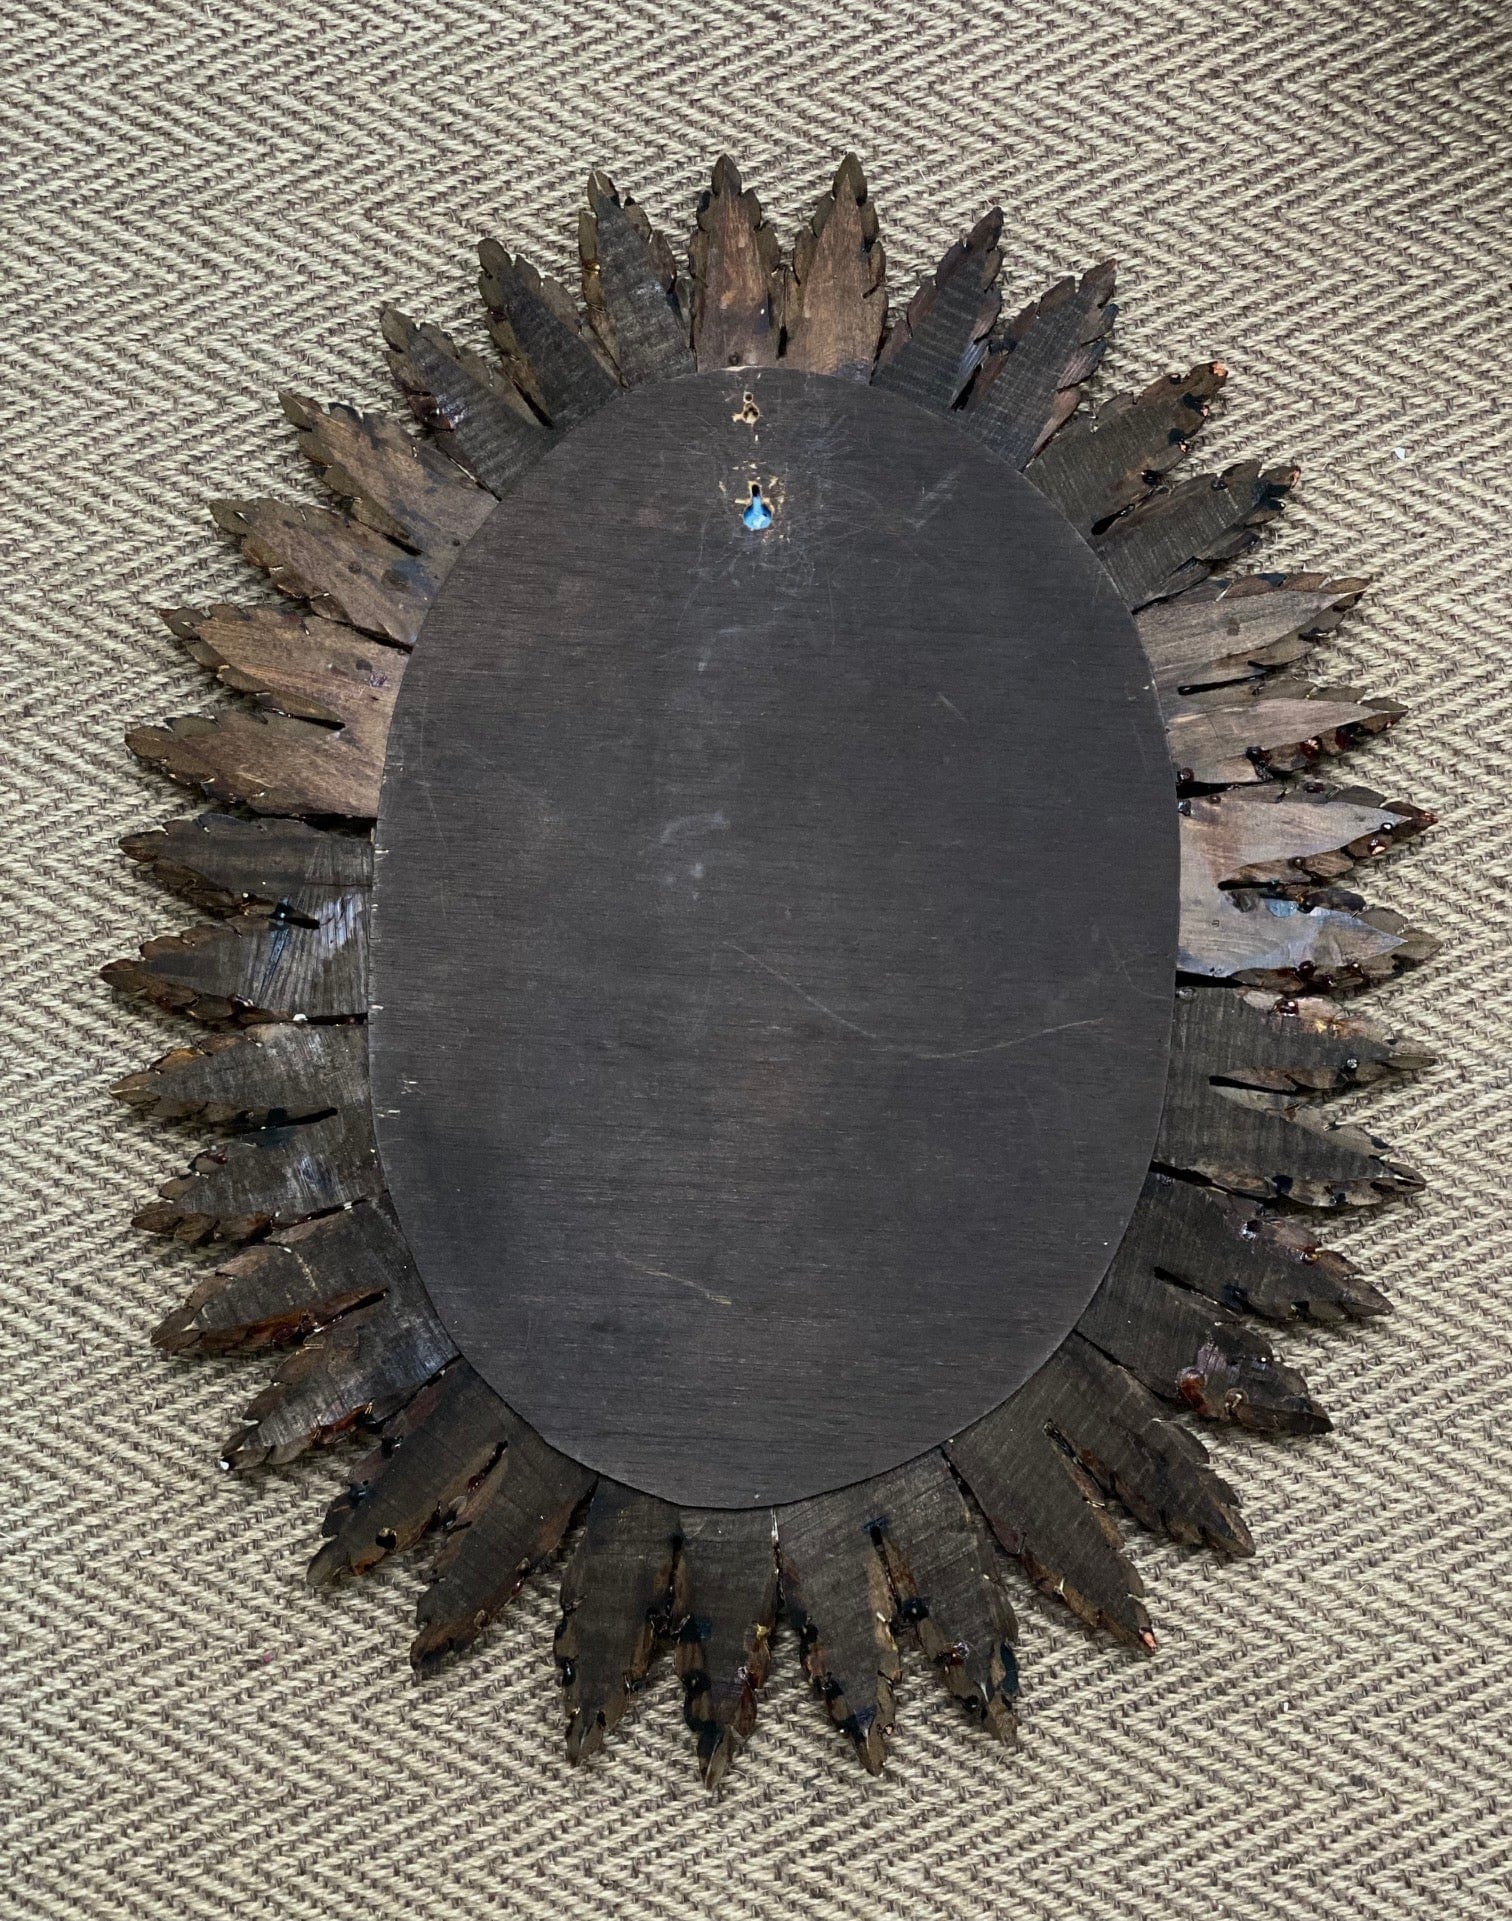 KEPT London Oval sunburst giltwood mirror